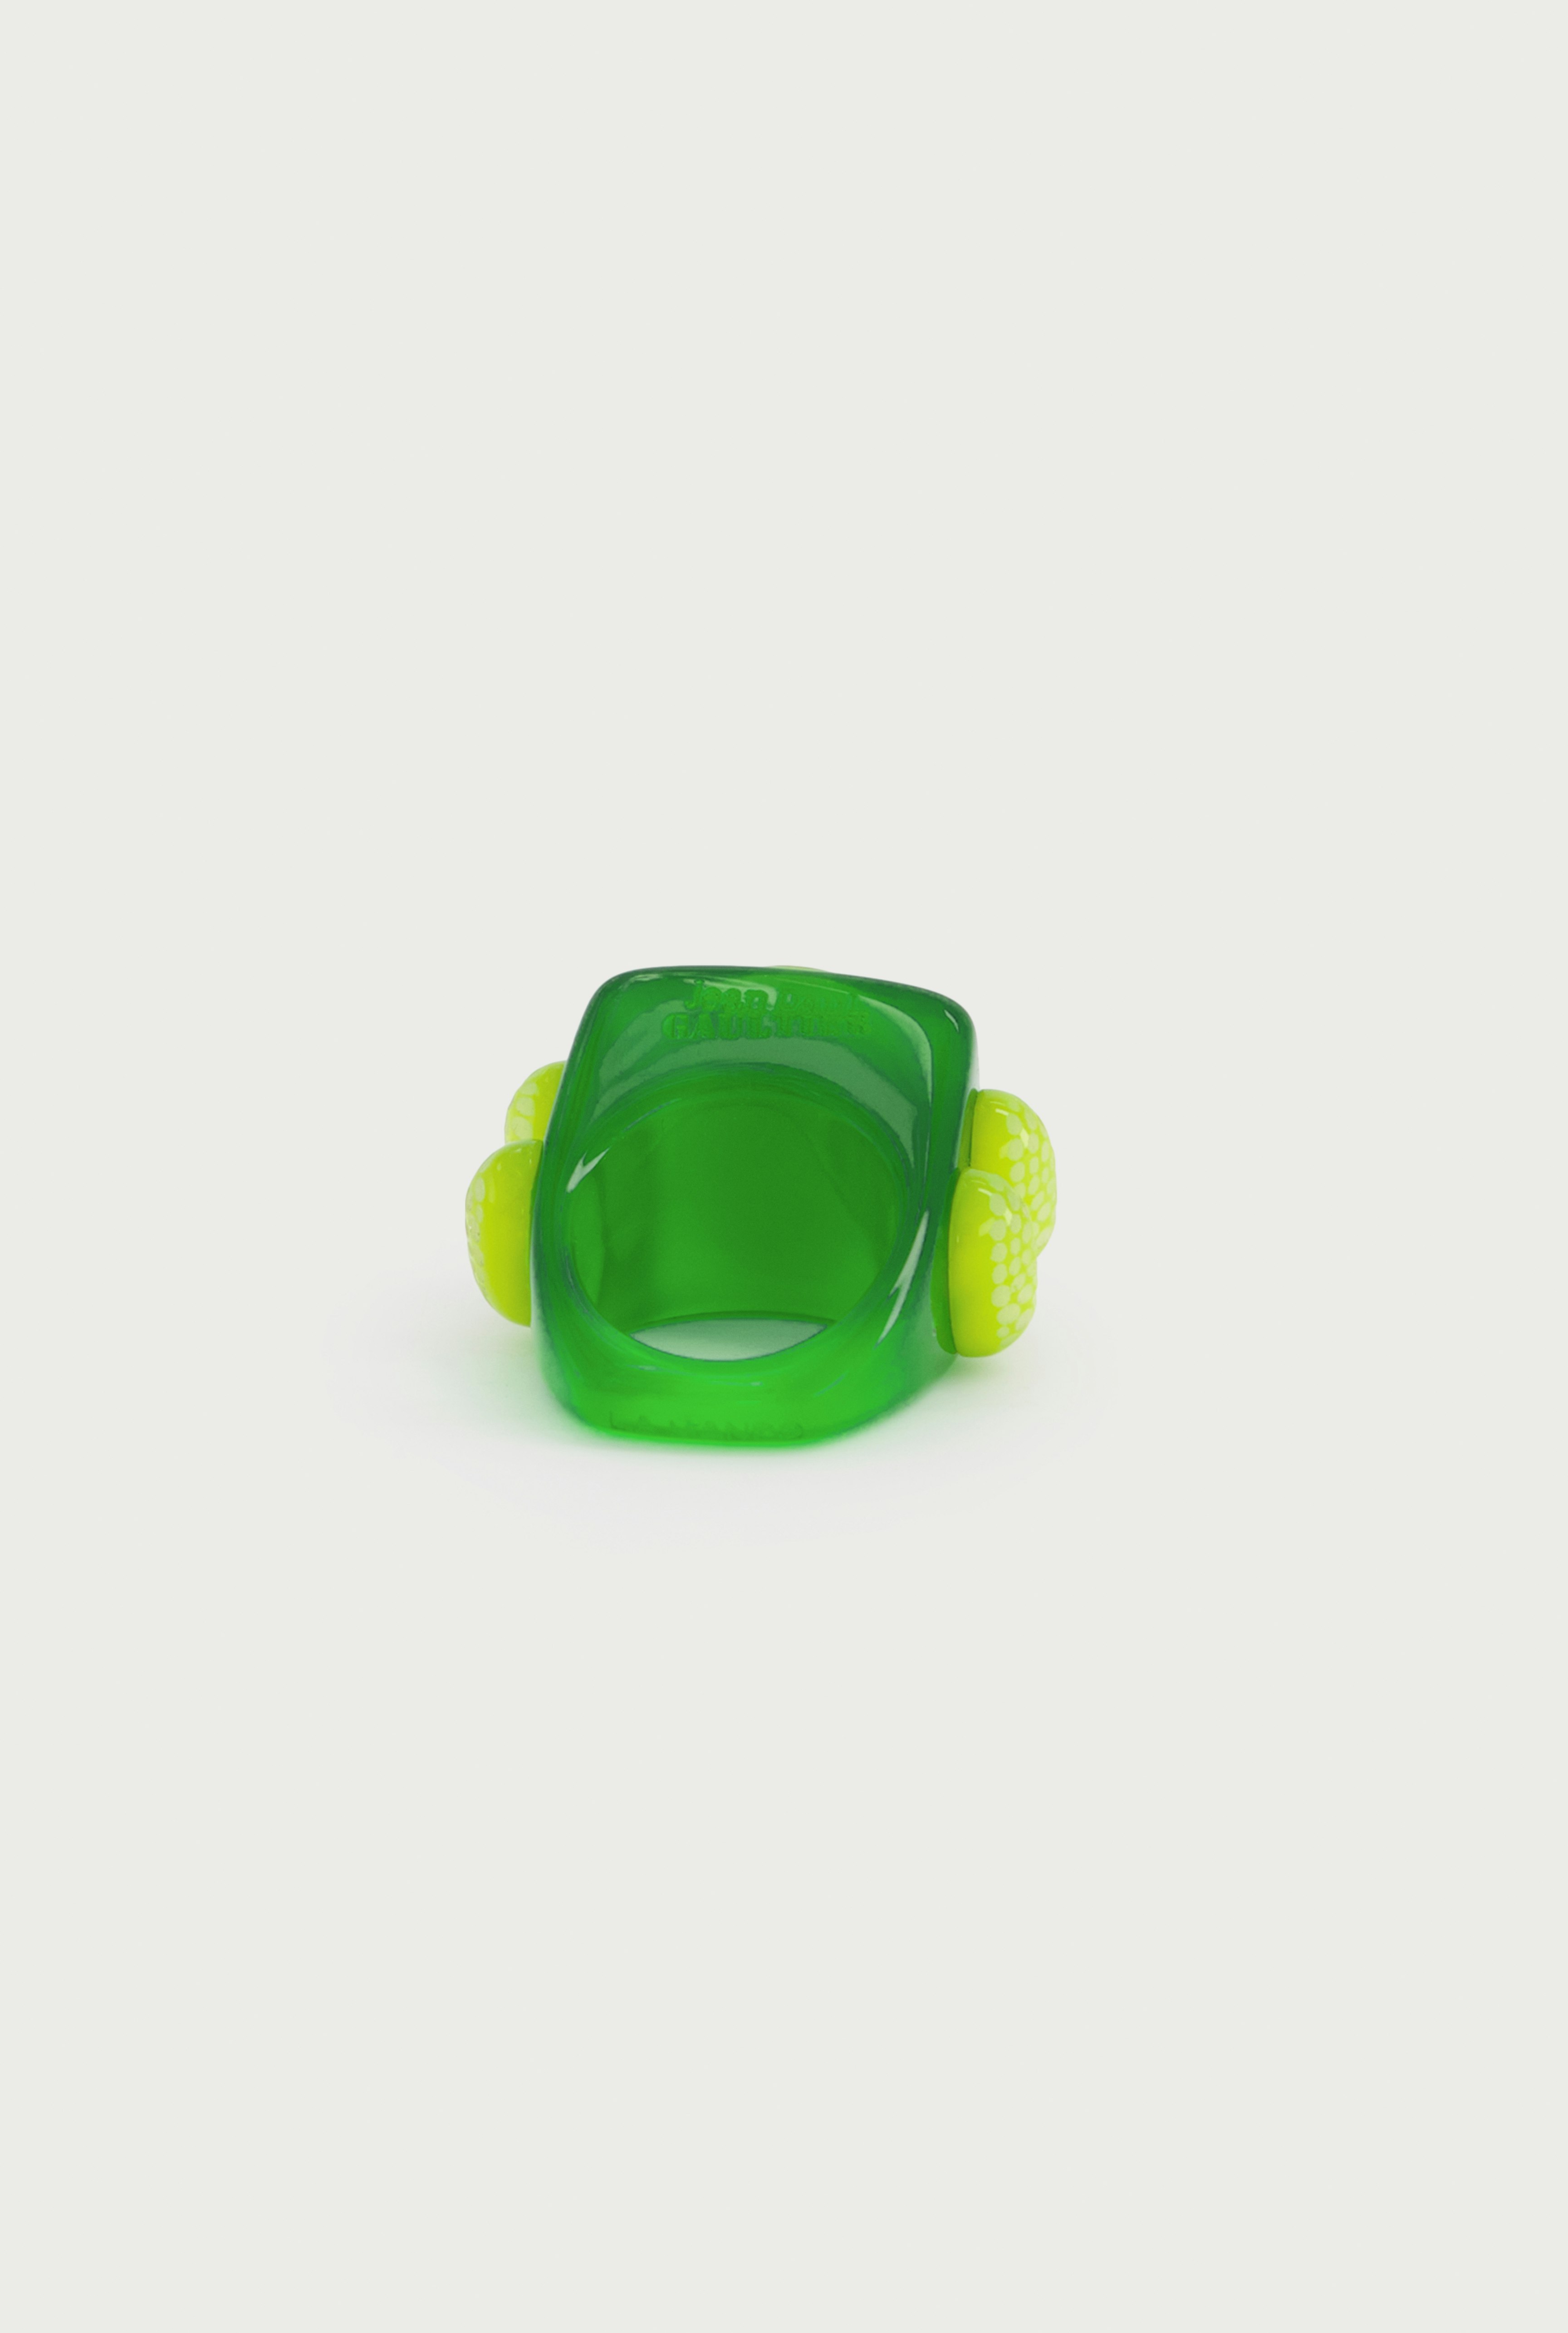 The Verde Botella Ring Jean Paul Gaultier x La Manso